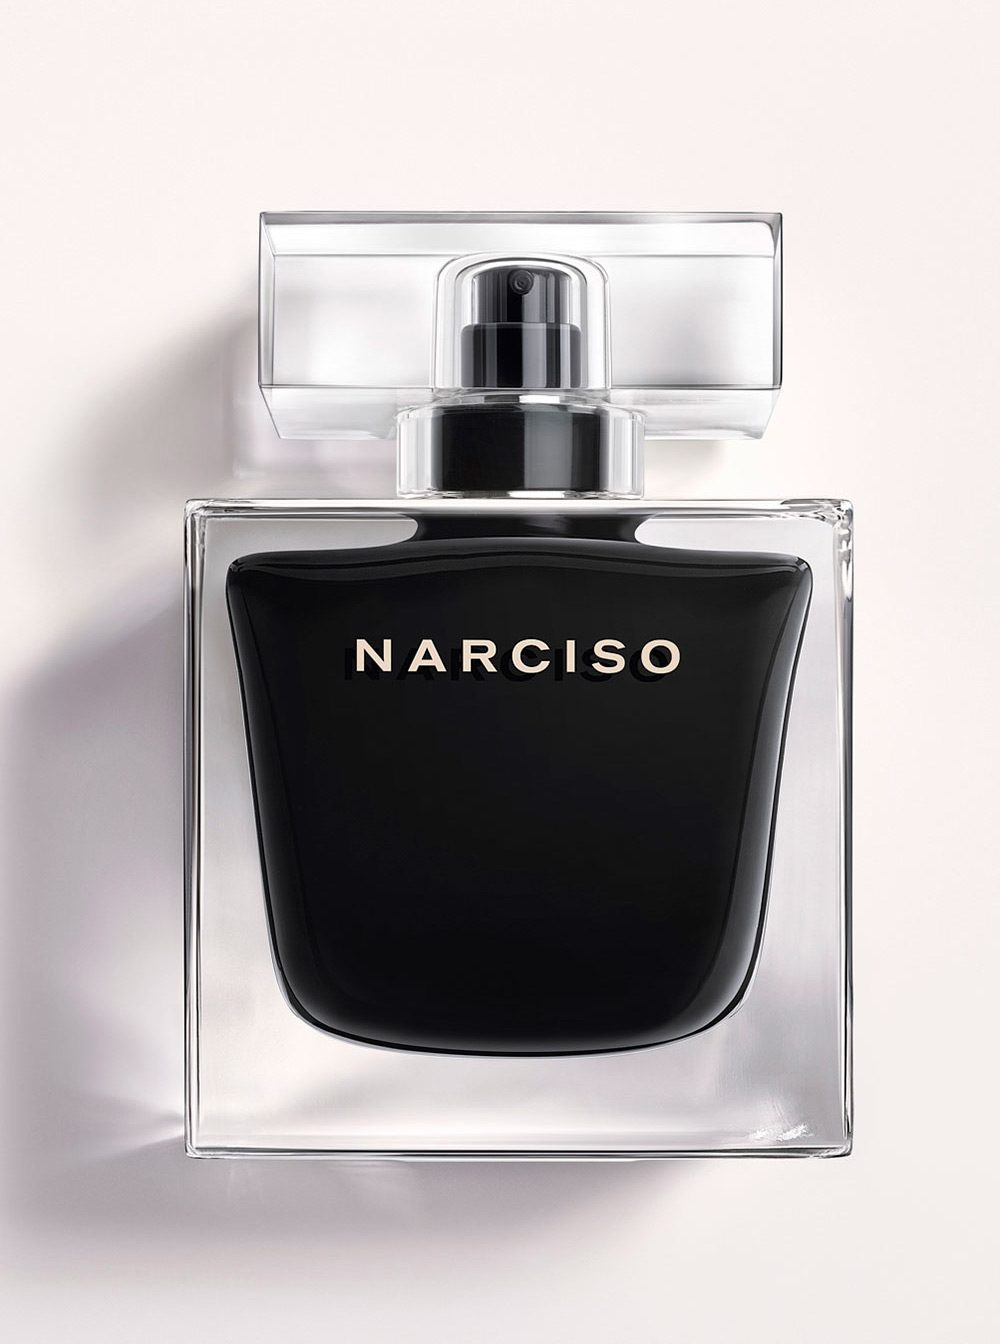 Narciso Parfum - Homecare24